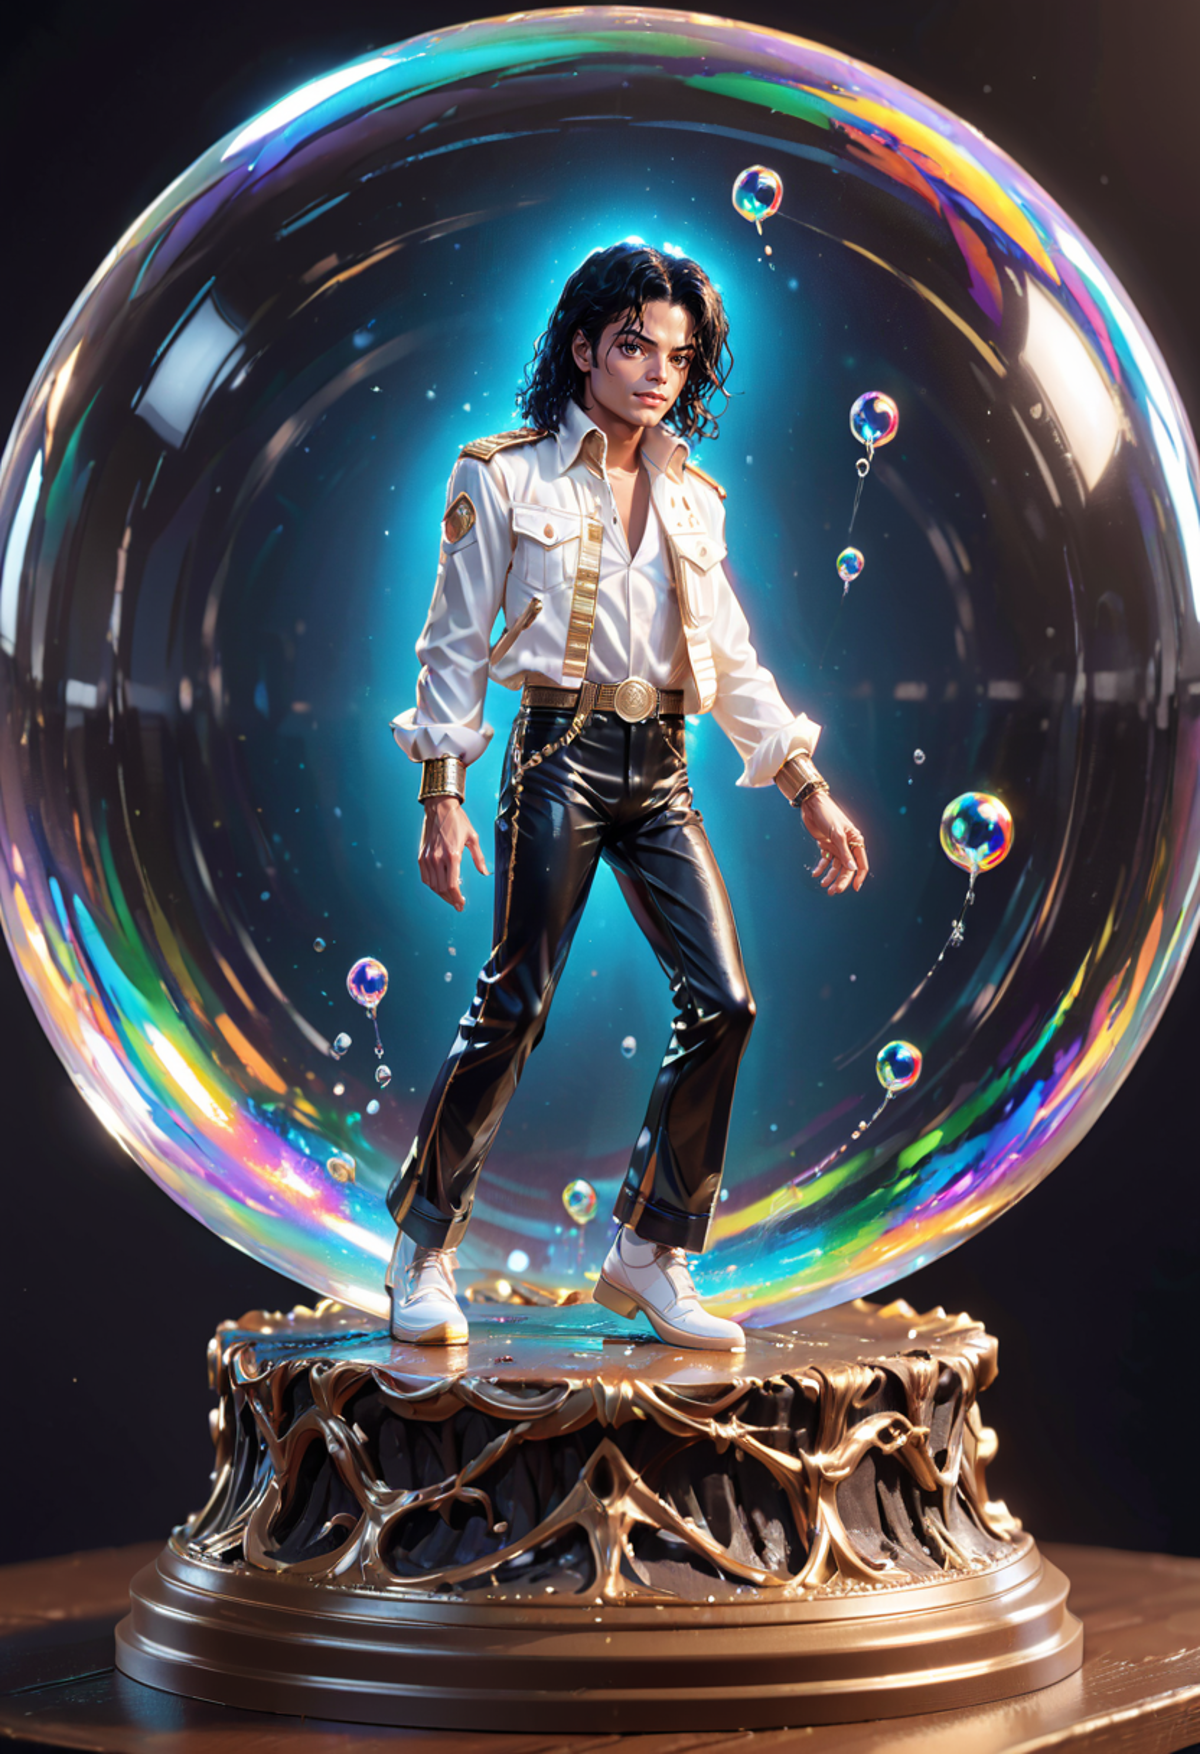 Michael Jackson in a bubble.